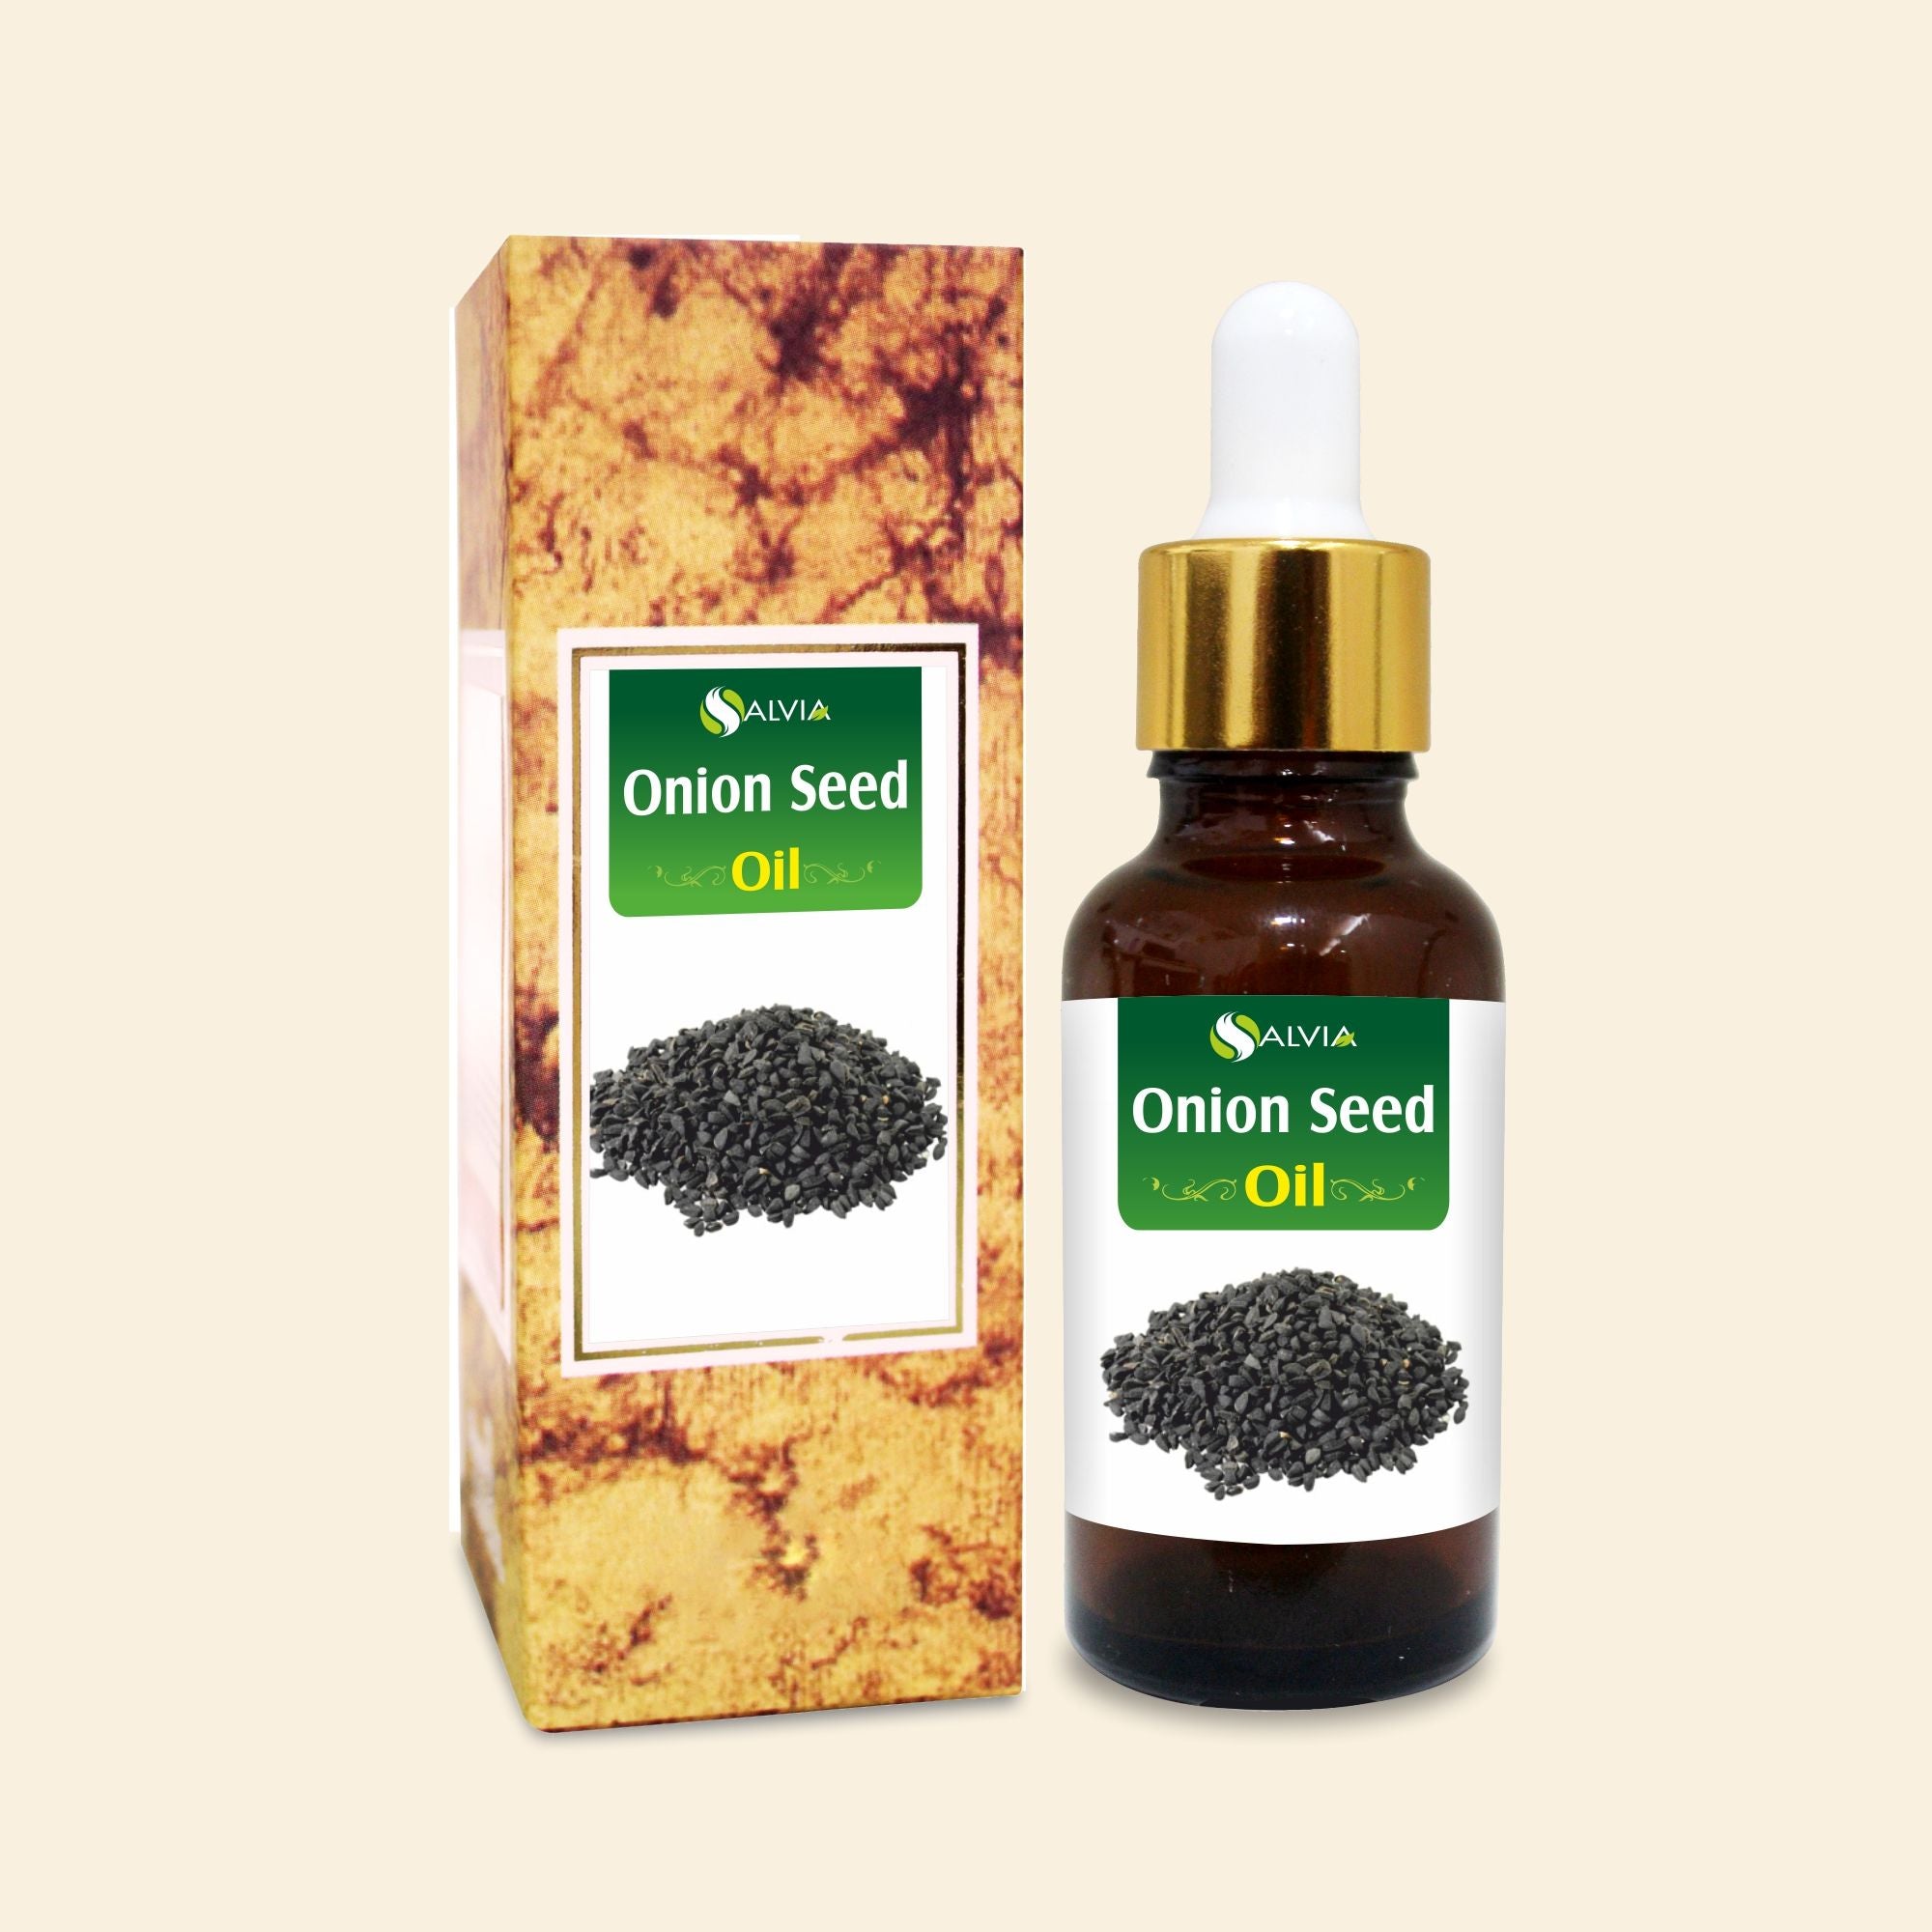 Salvia Natural Carrier Oils Onion Seed Oil (Allium Cepa) 100% Natural Pure Carrier Oil